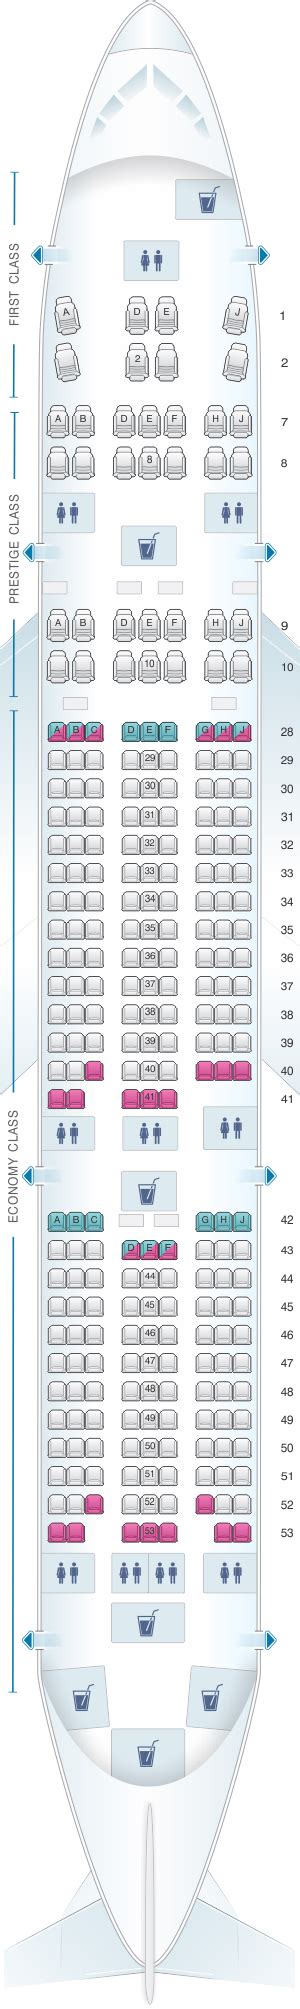 korean air seat map boeing 777 200